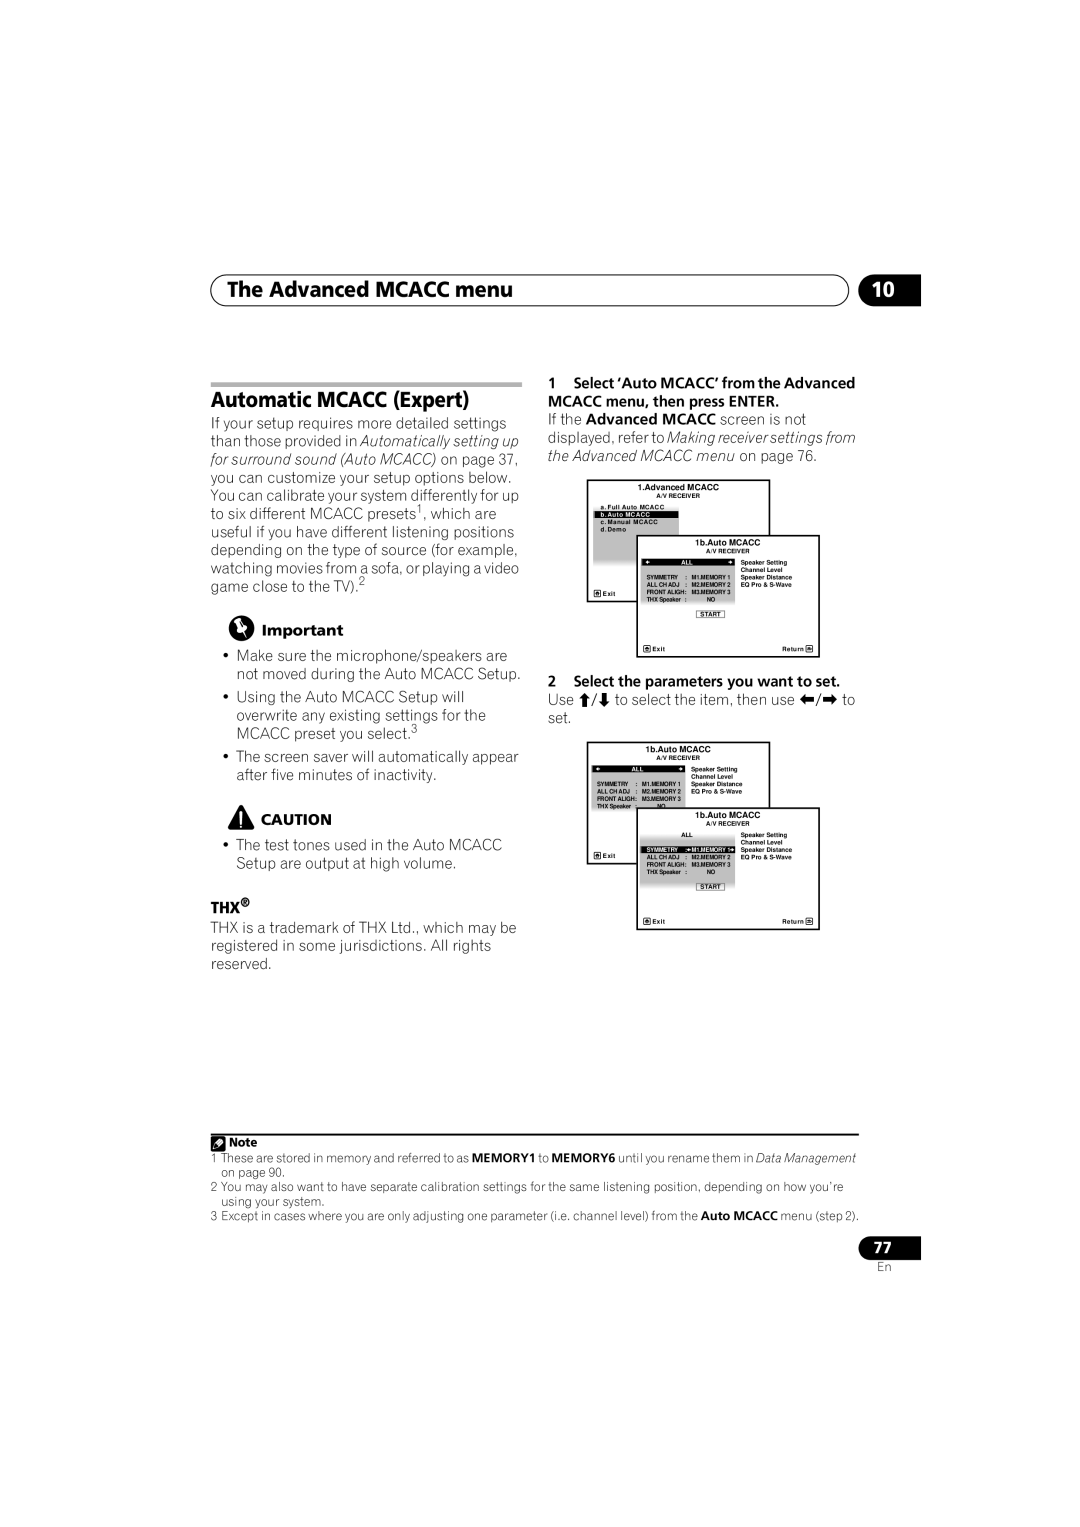 Pioneer VSX-919AH-S manual The Advanced MCACC menu Automatic MCACC Expert 